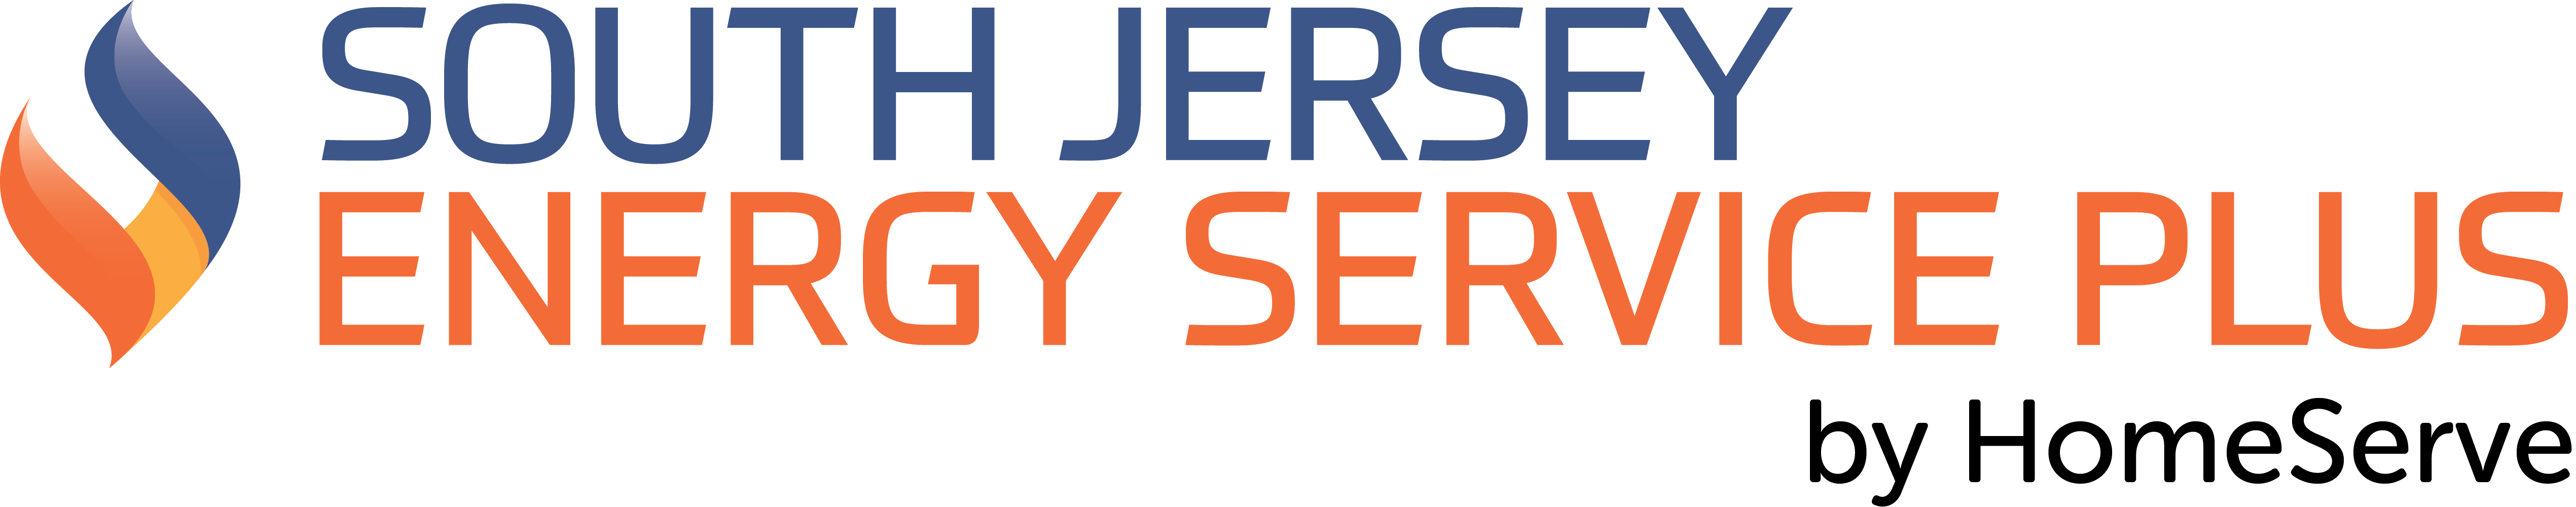 South Jersey Energy Service Plus Logo